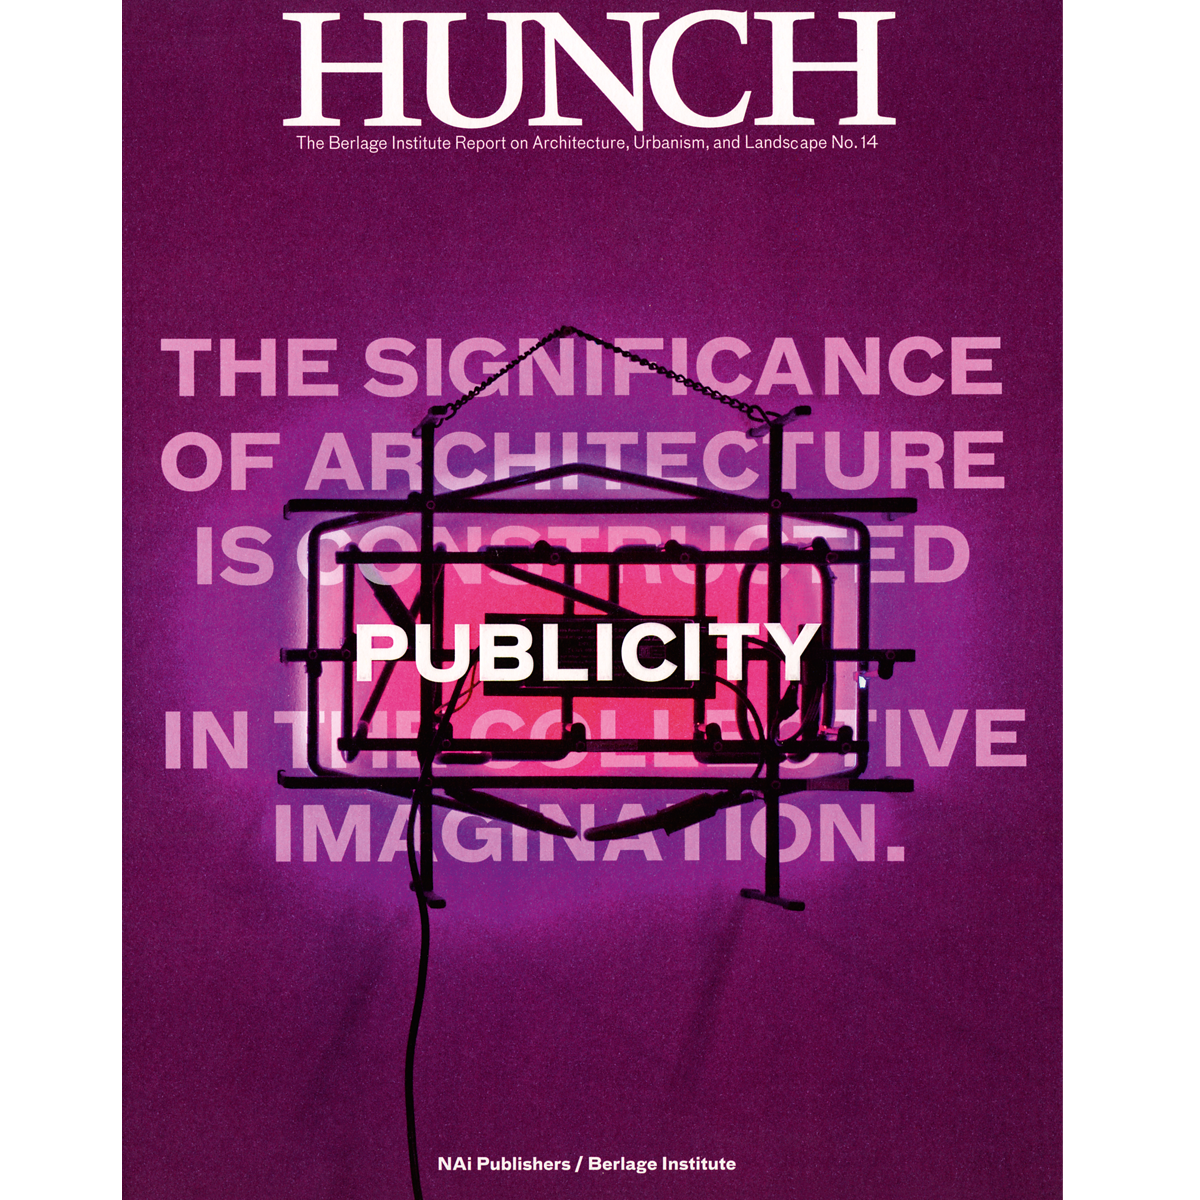 Hunch: Publicity